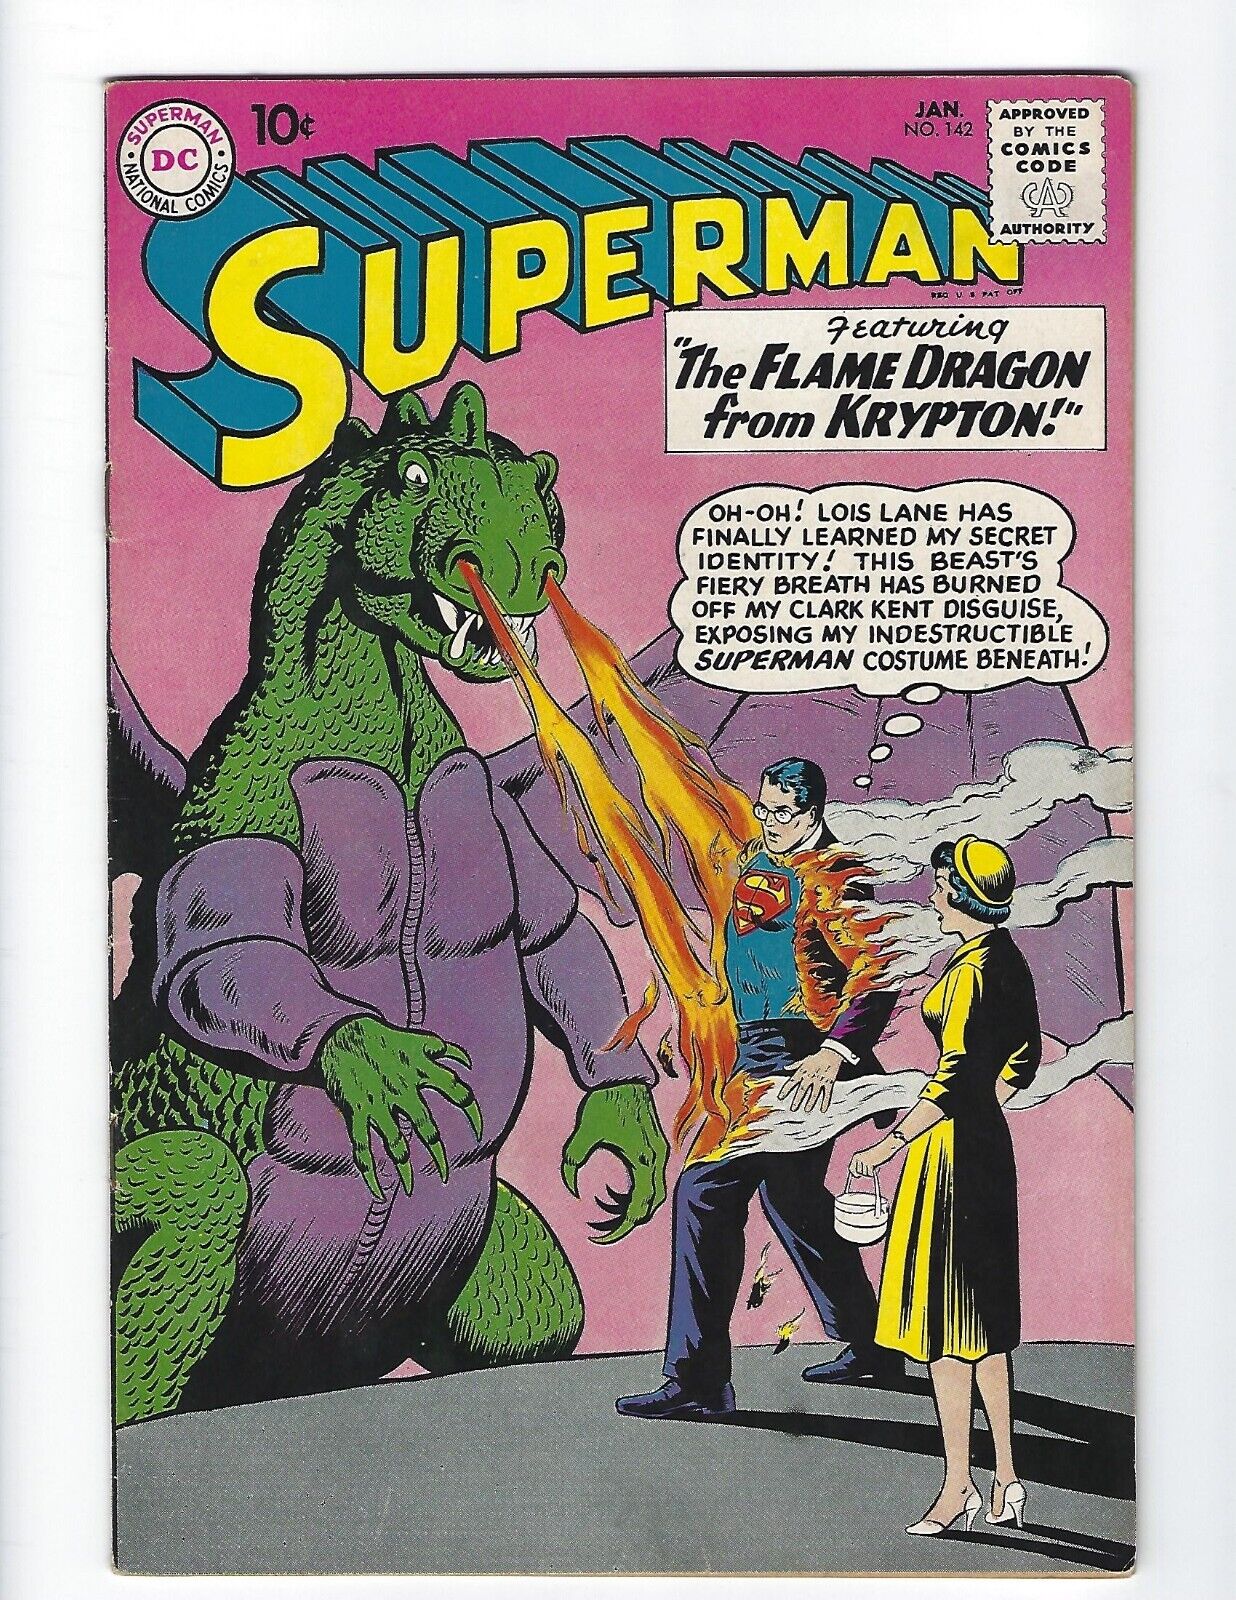 SUPERMAN #142 - NICE FN/VF 7.0 - 2ND BAT X-OVER - 1961 - LOW $89 B.I.N. 